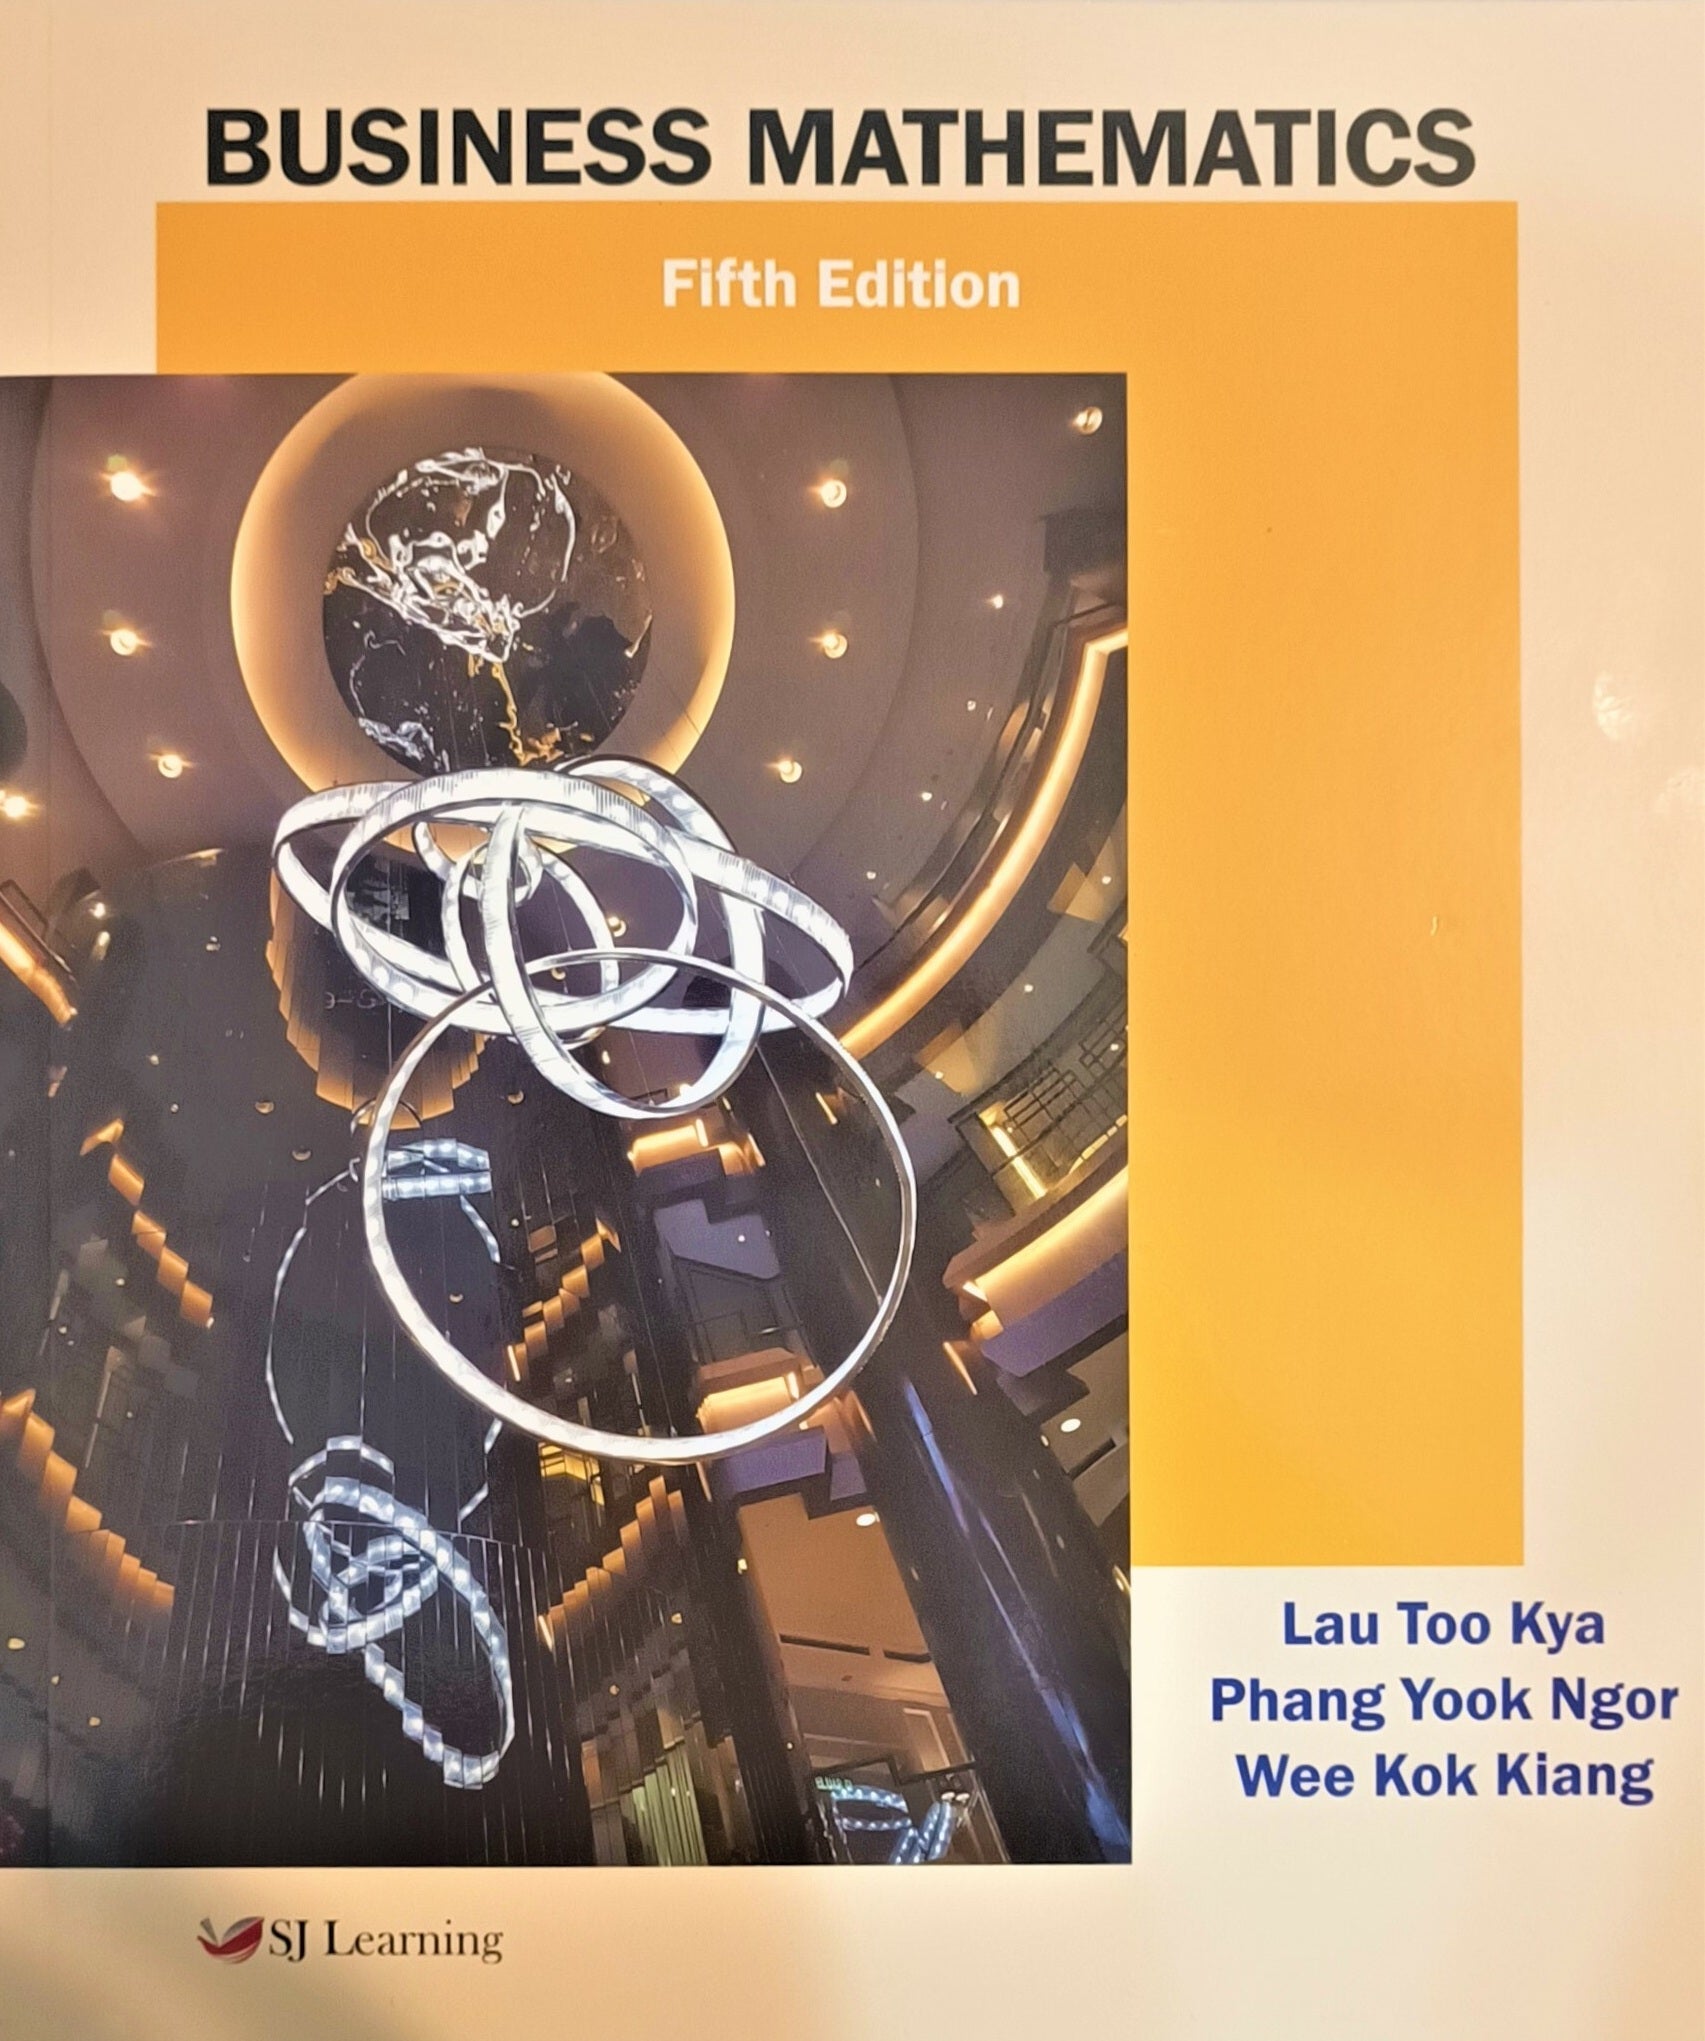 [New 5th Ed] Business Mathematics - 5th Edition - Lau Too Kya - 9789671859452 - SJ Learning